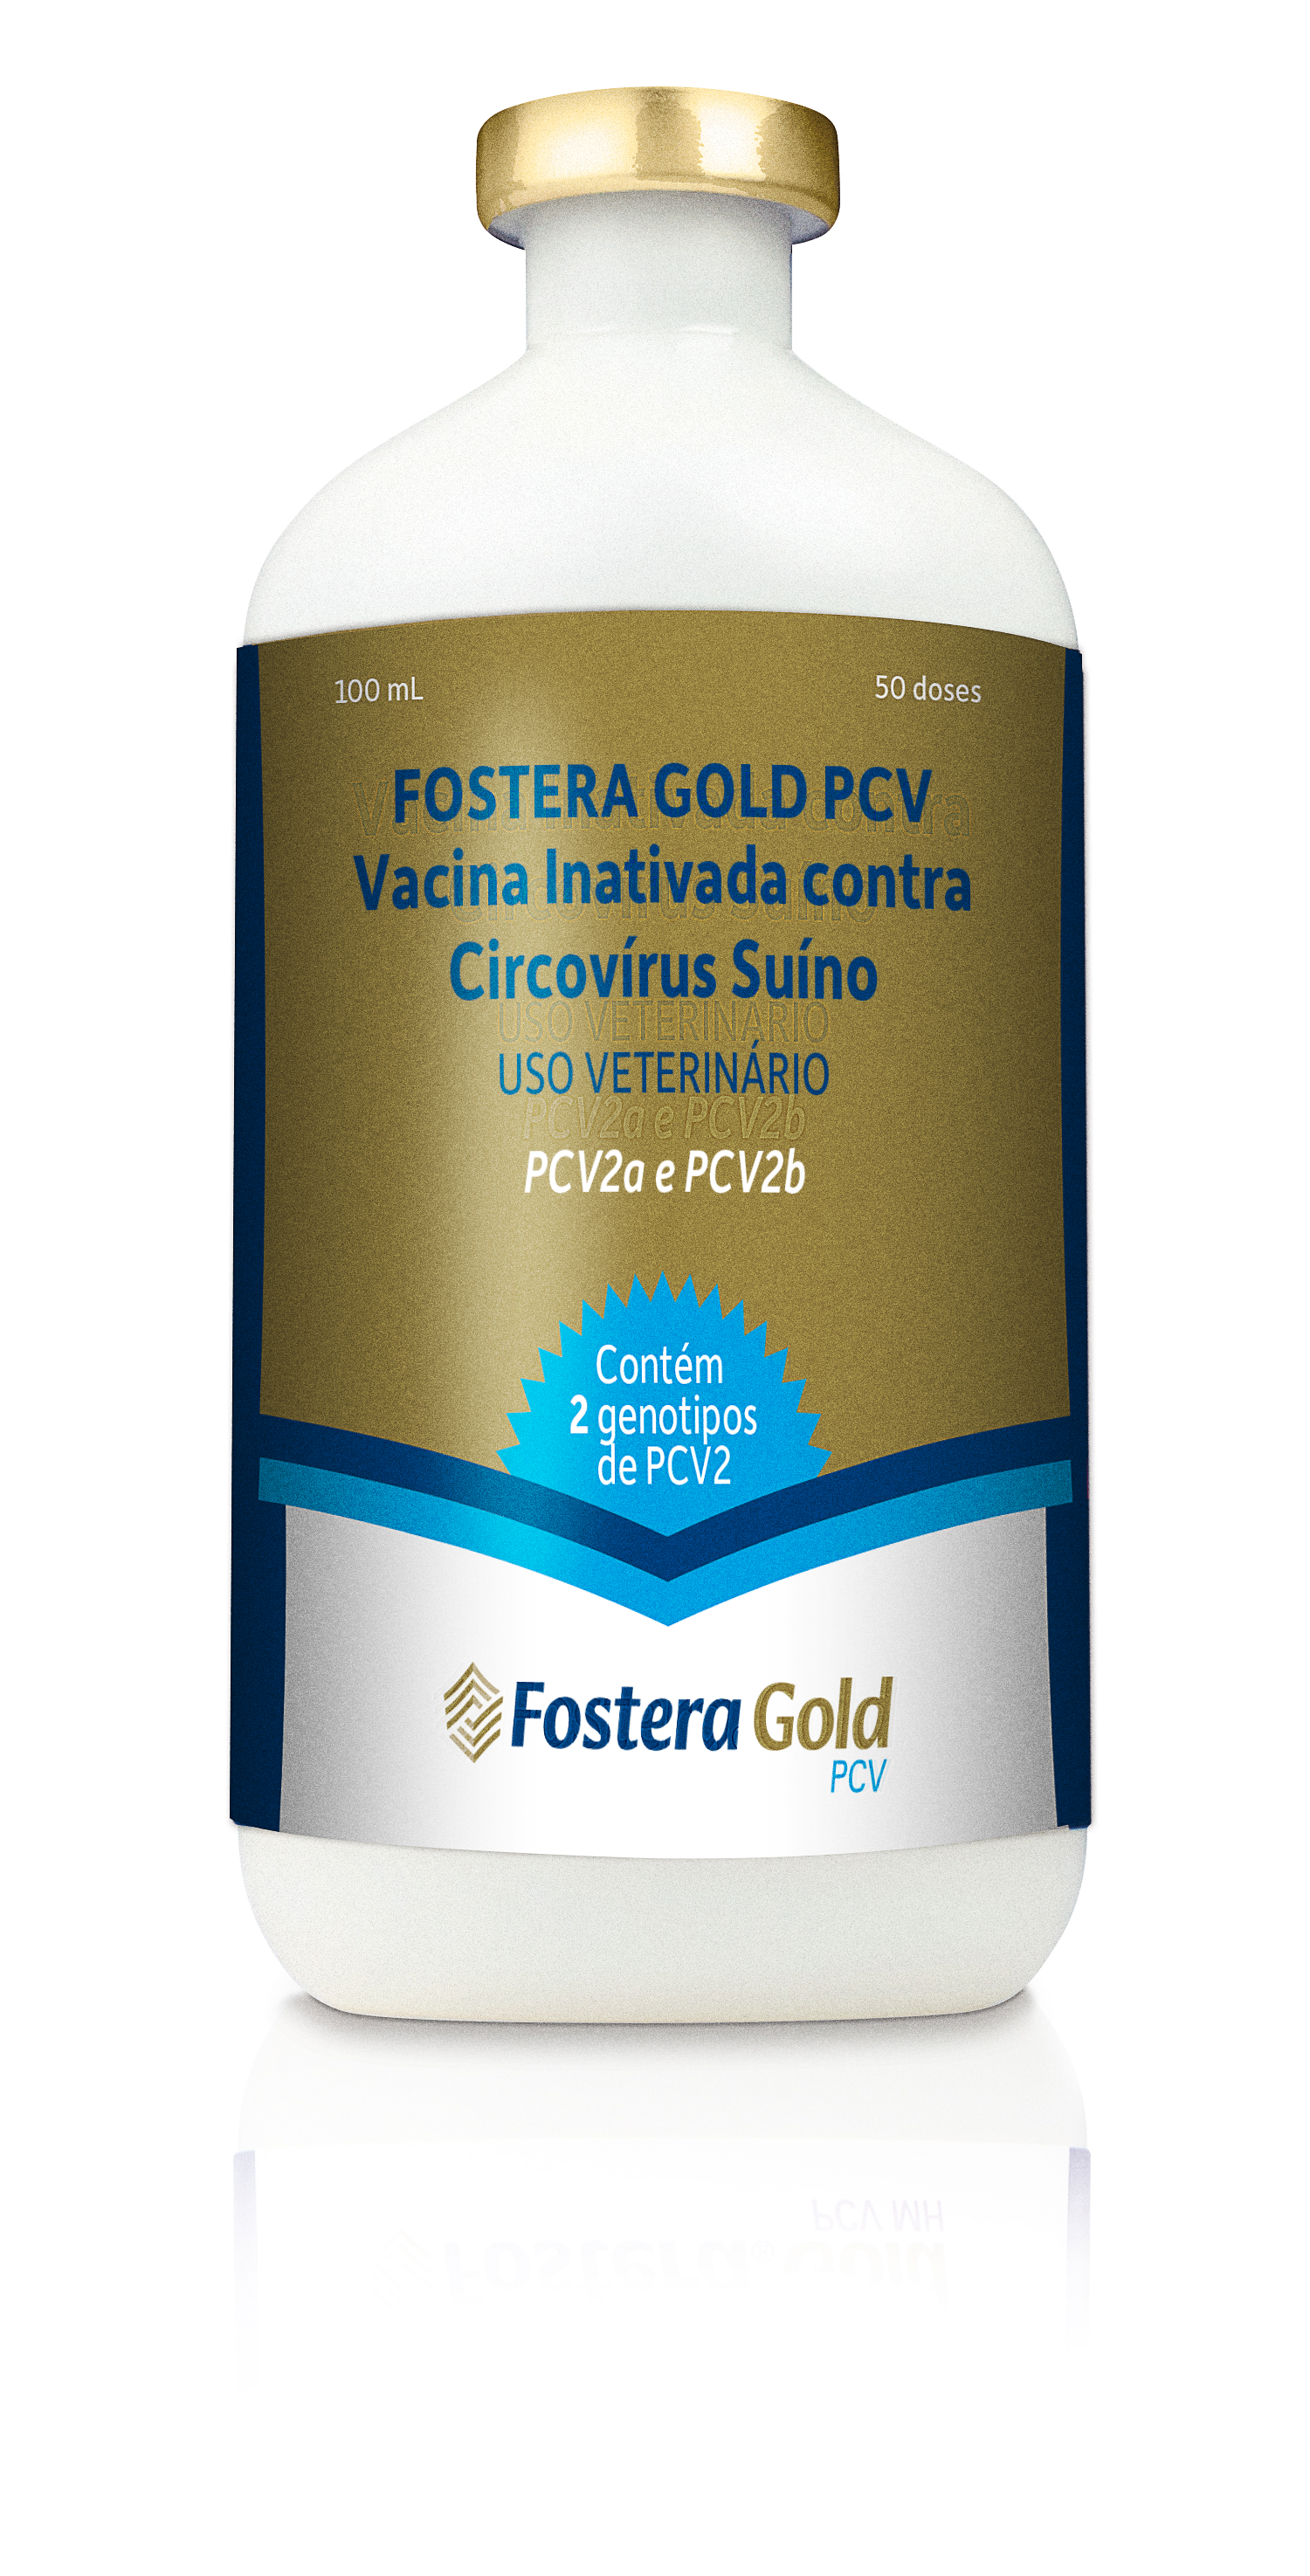 Fostera gold